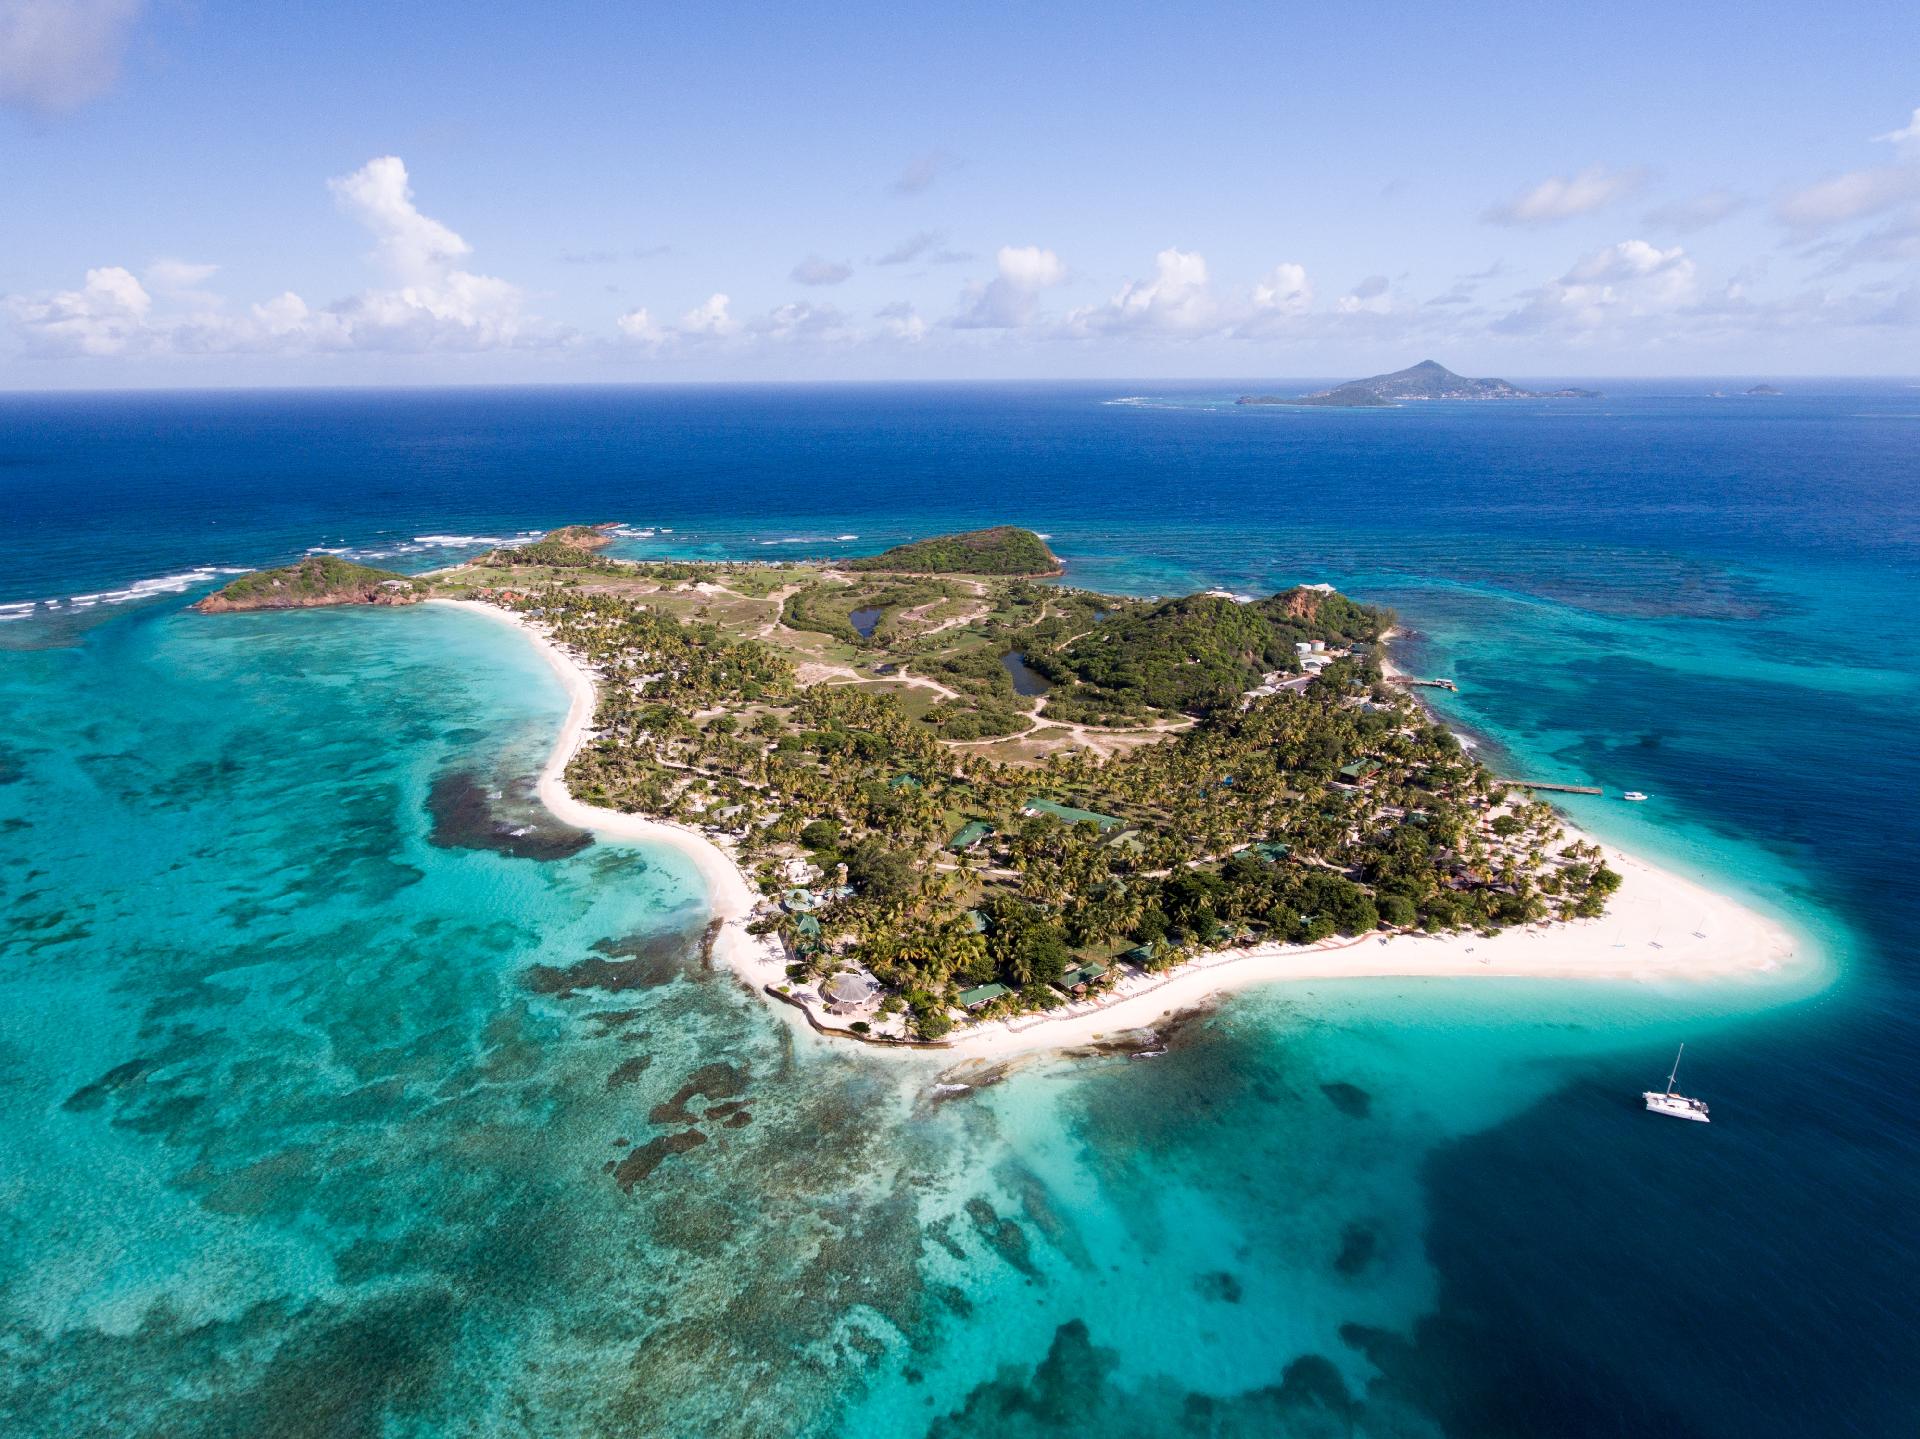 Just island. Парадиз остров Карибского моря. Шиншилловые острова в Карибском. Остров вблизи. Архитектура карибских островов.